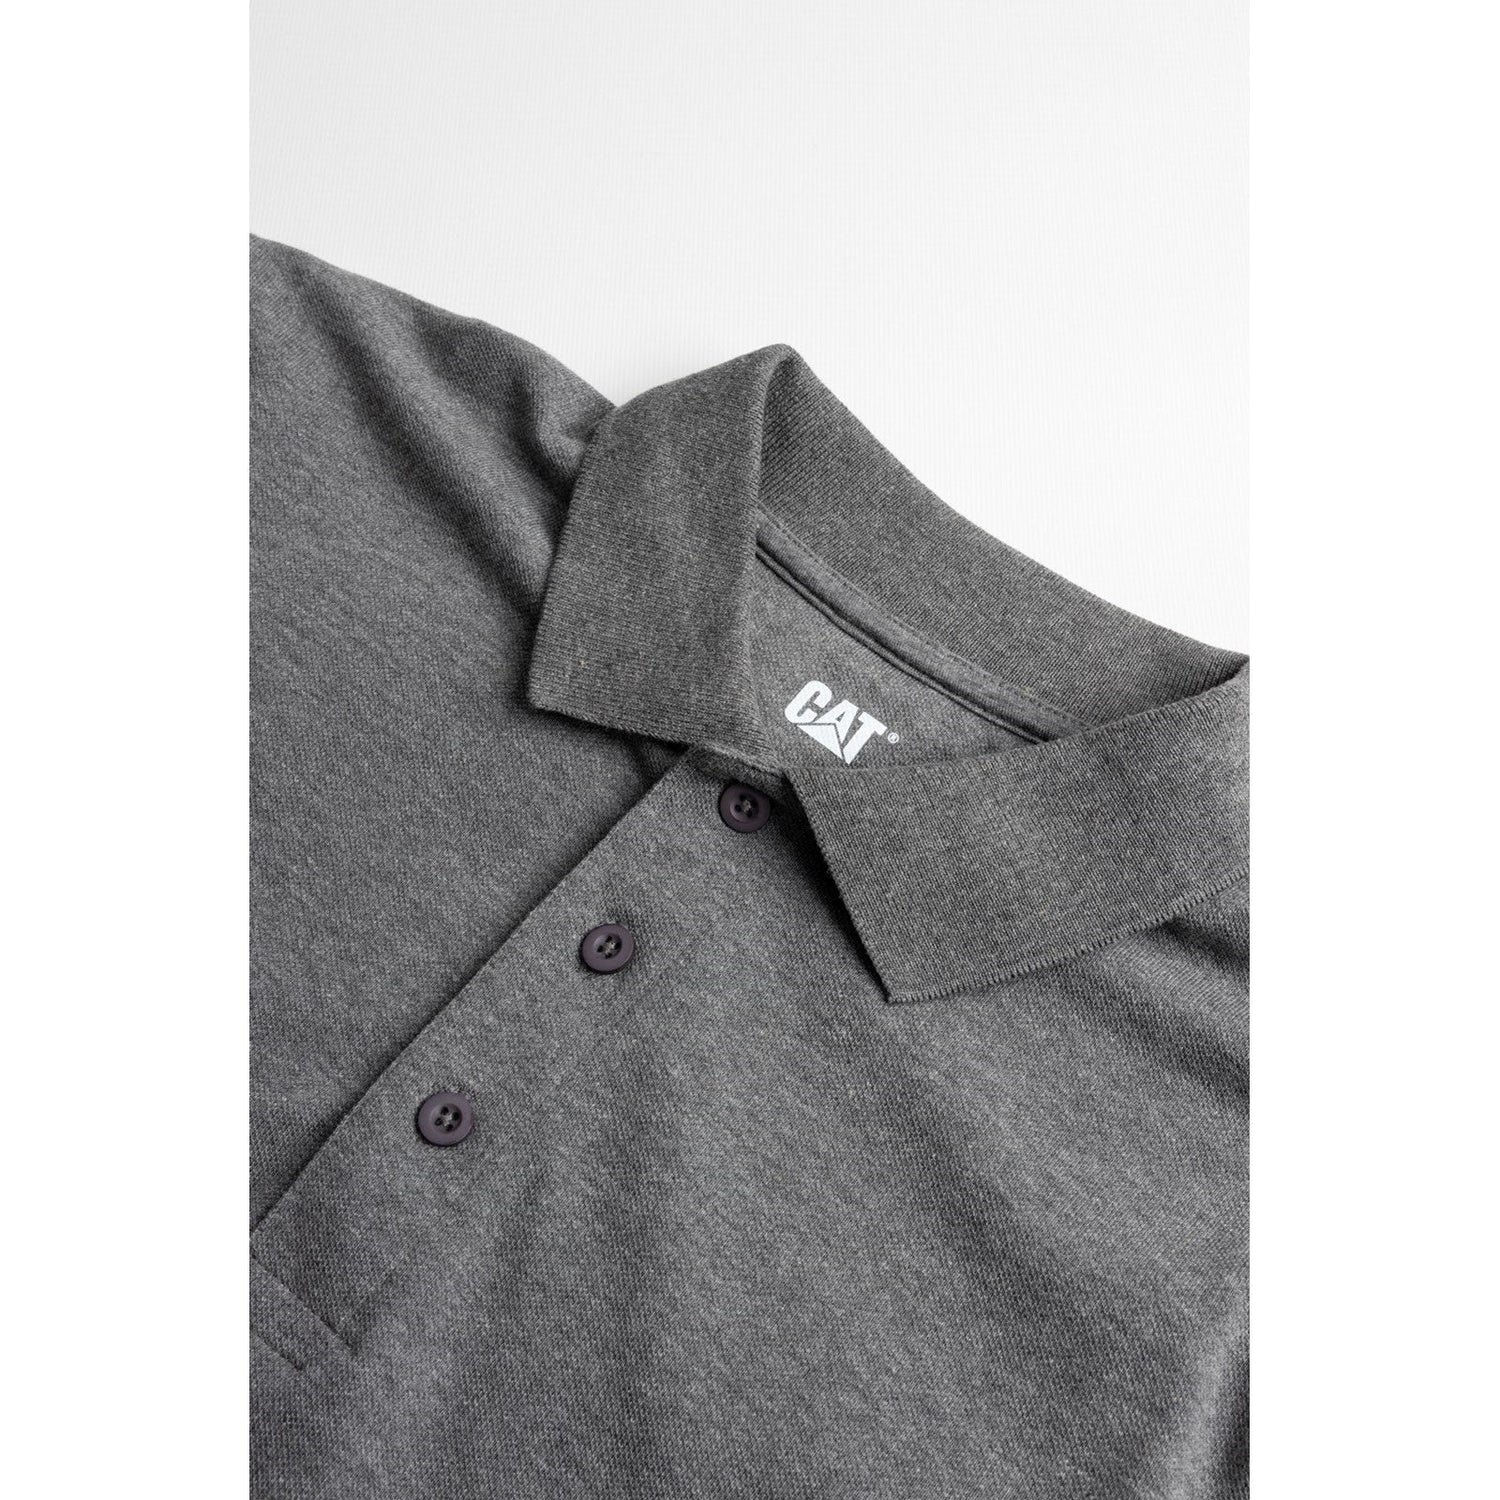 Caterpillar Essentials Polo Shirt. Dark heather Grey. Collar 